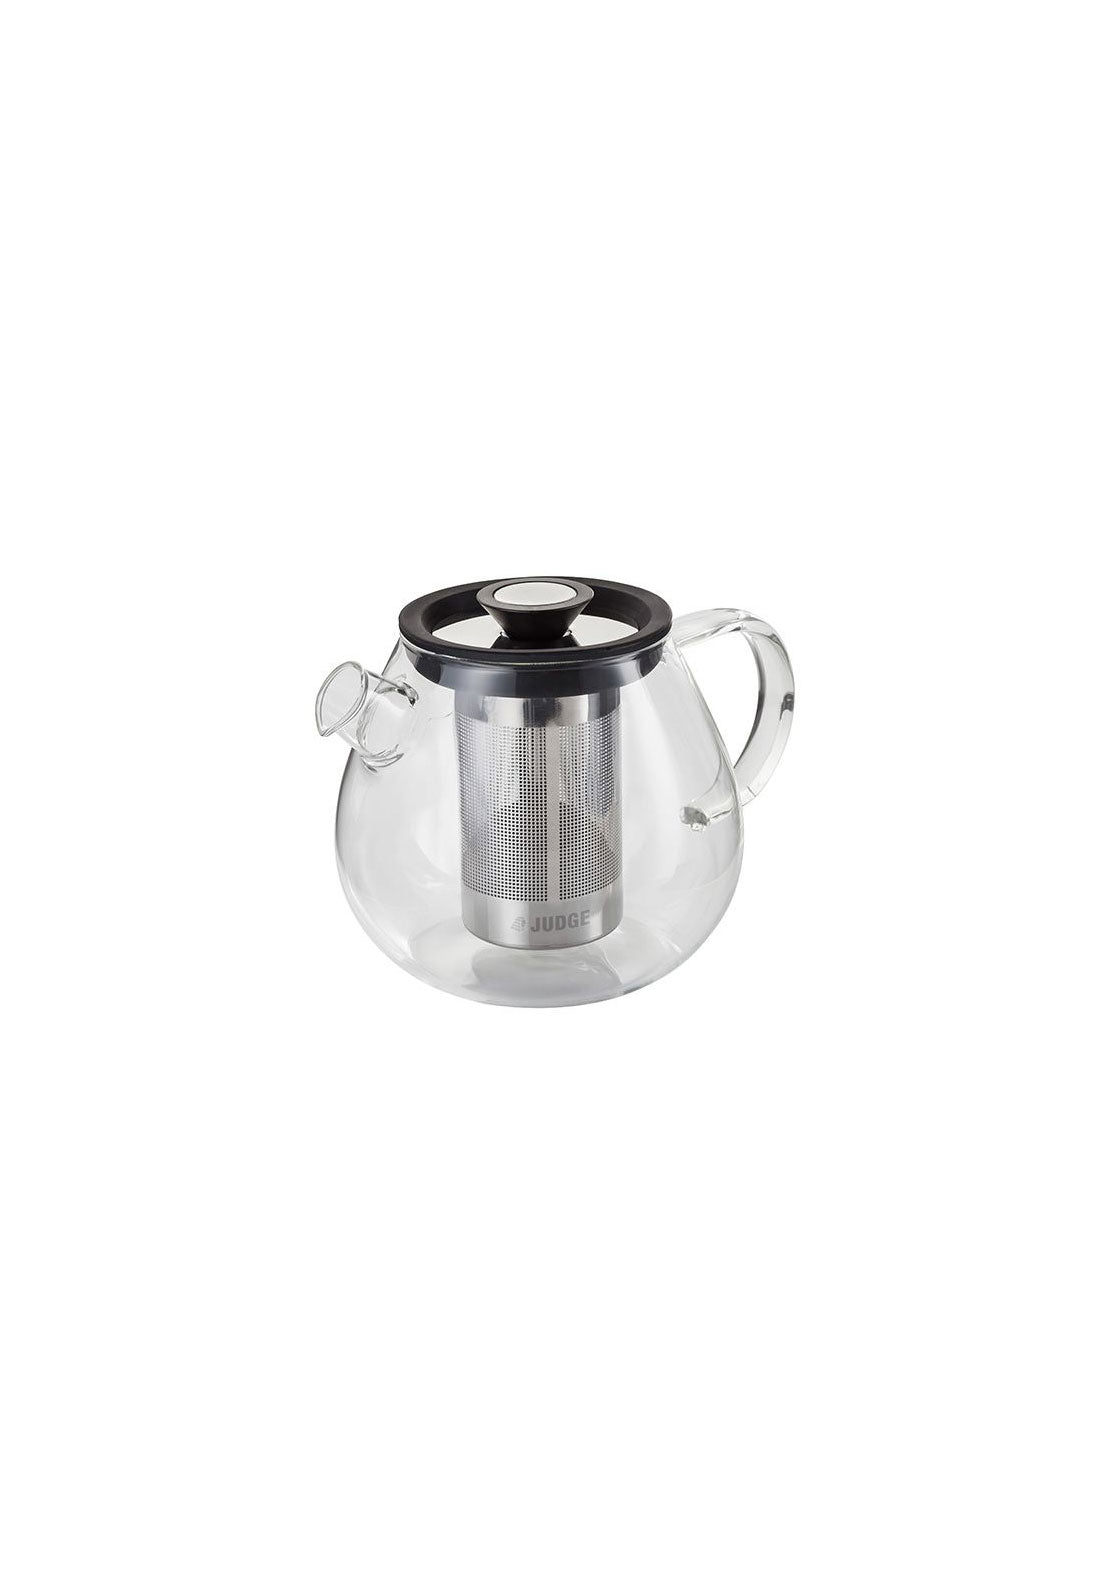 Judge 5 Cup Glass Teapot, 1L | JDG50 1 Shaws Department Stores